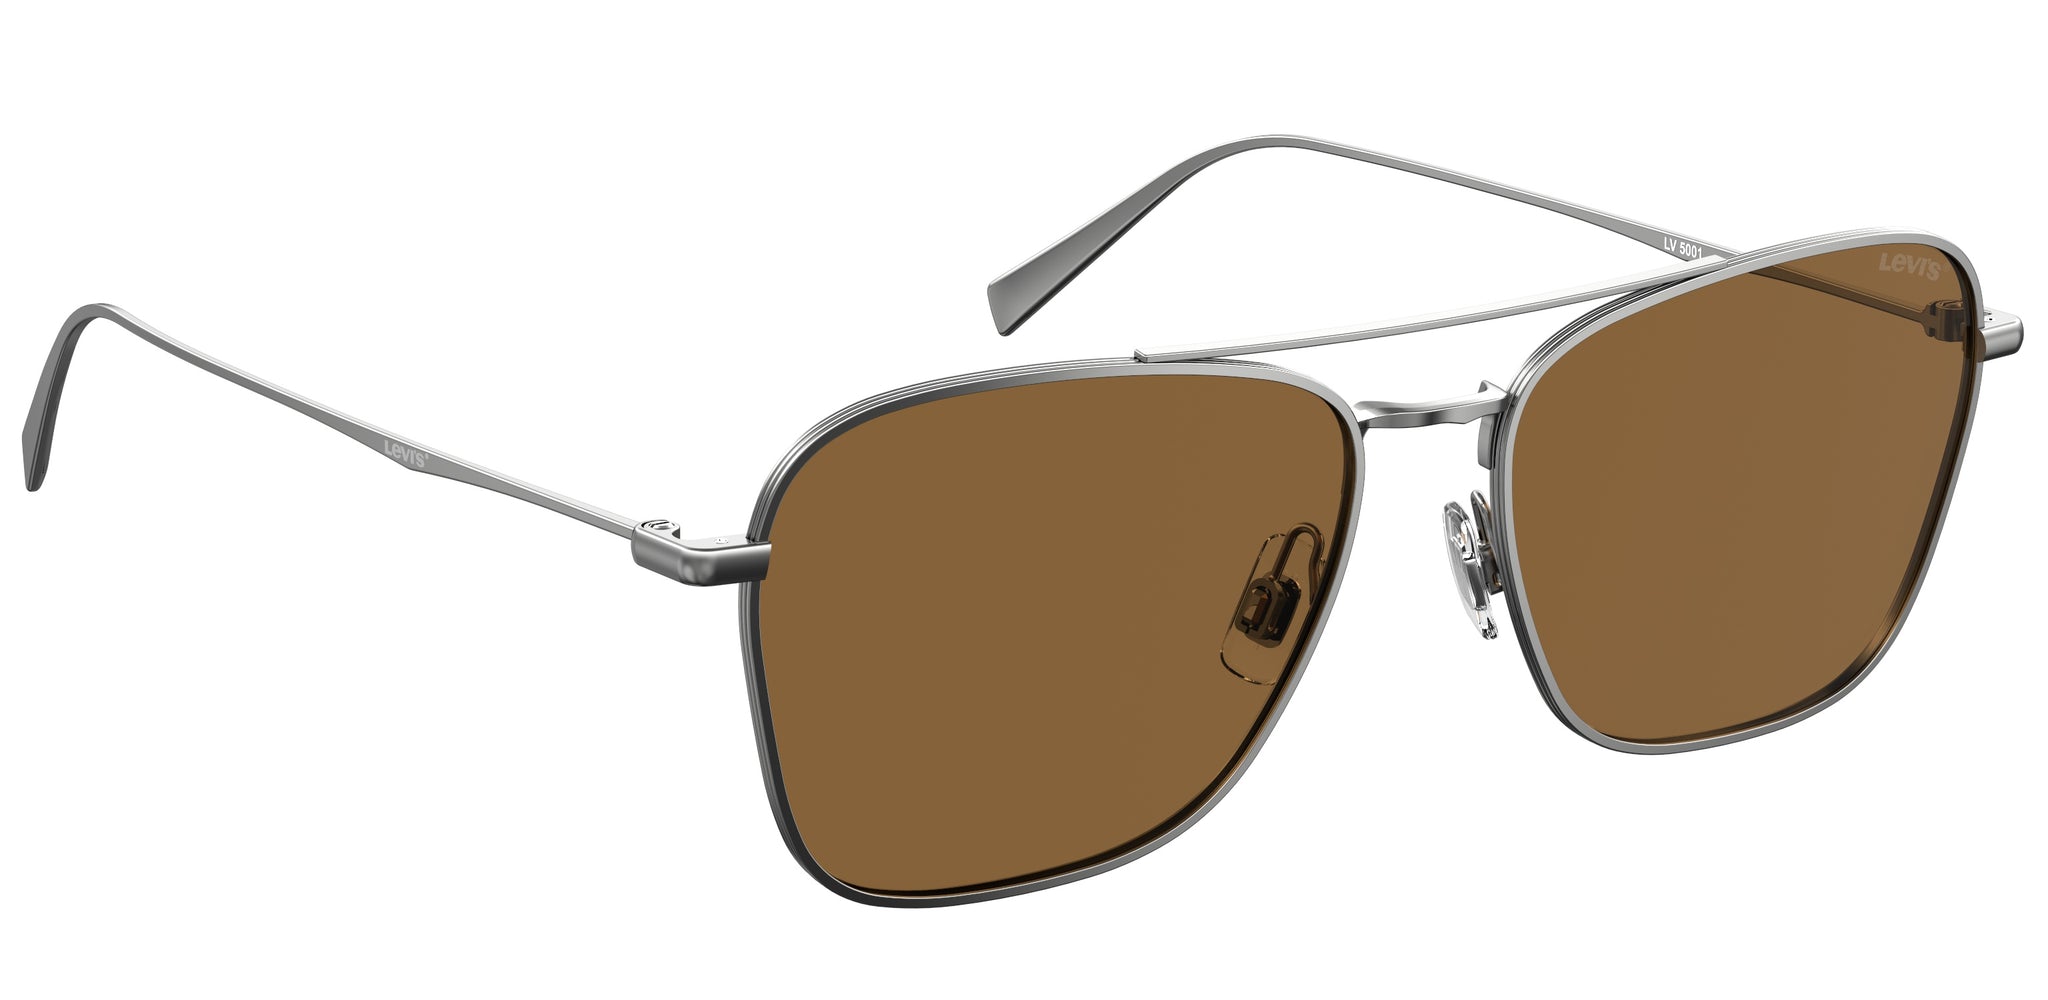 Levis Navigator shaped Sunglasses for Men LV 5001/S 6LB 5870 Brown